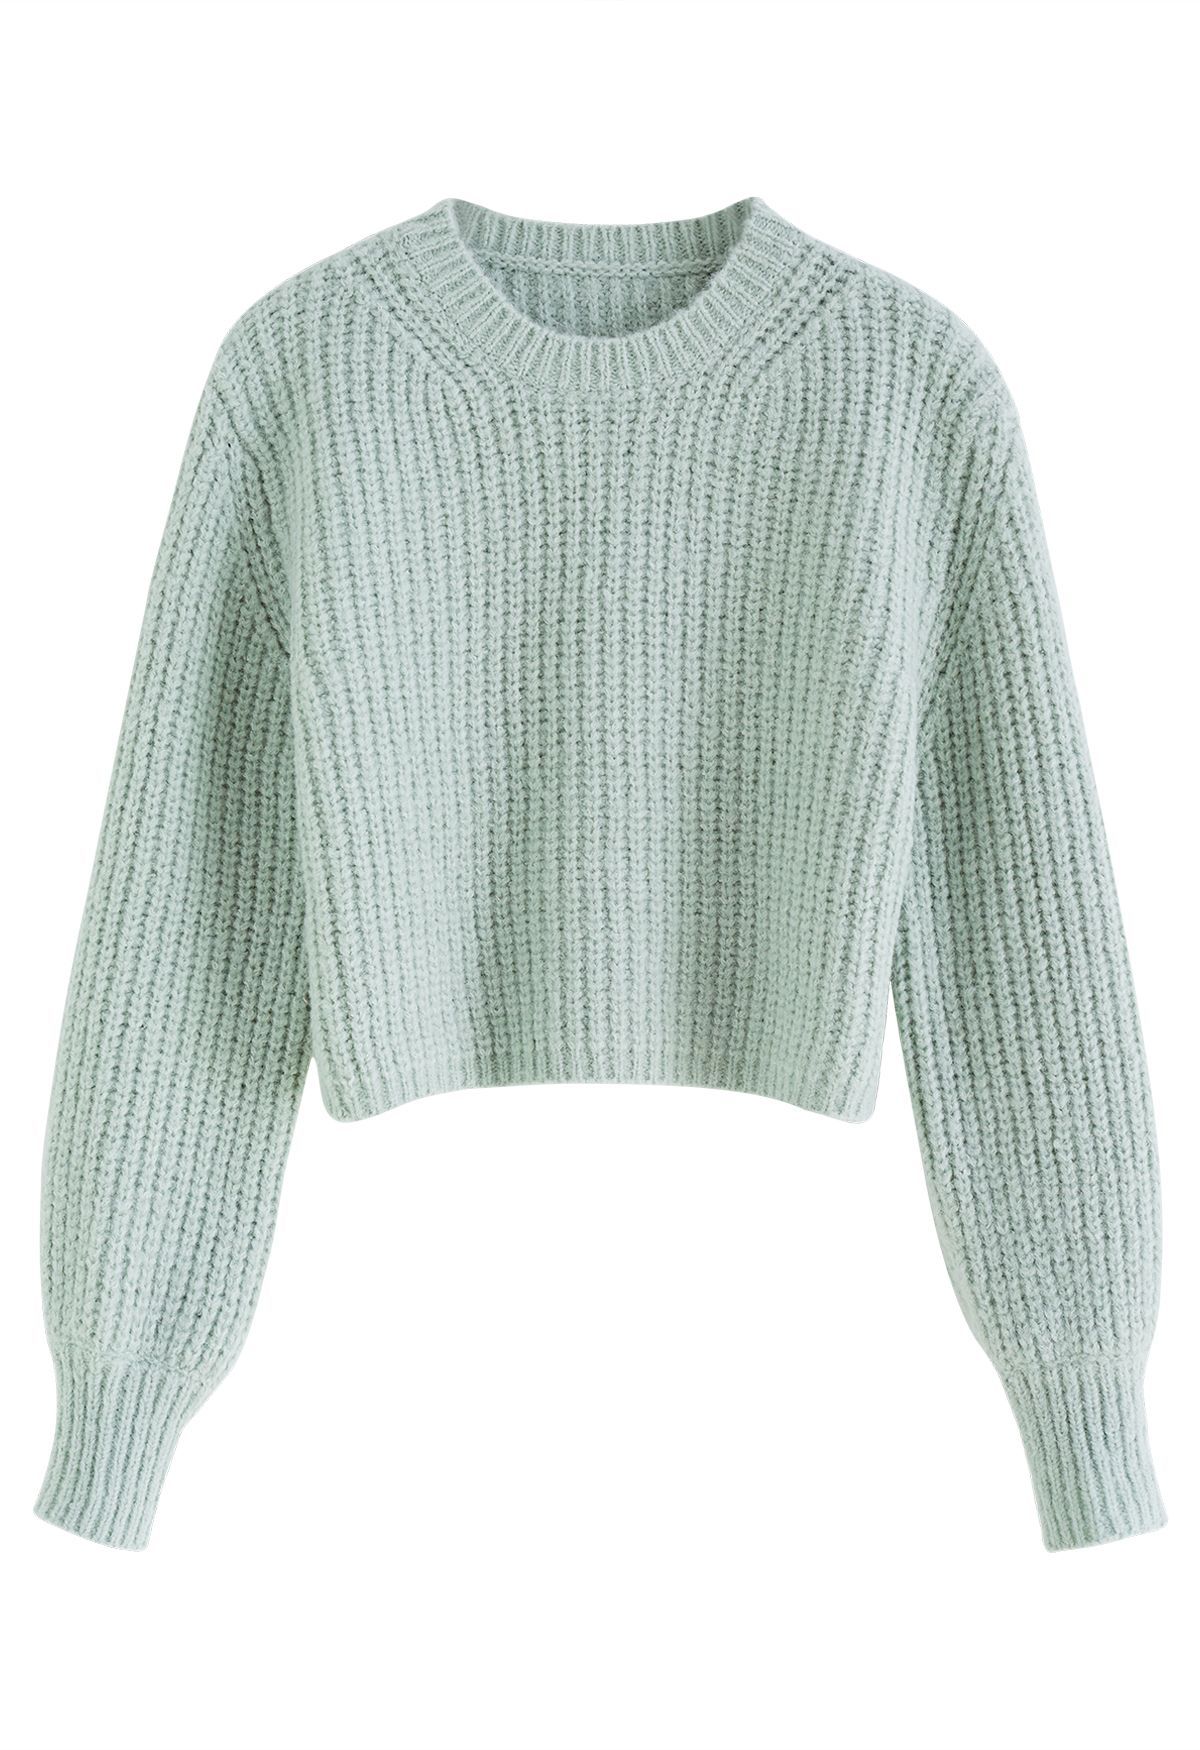 Round Neck Crop Knit Sweater in Mint | Chicwish